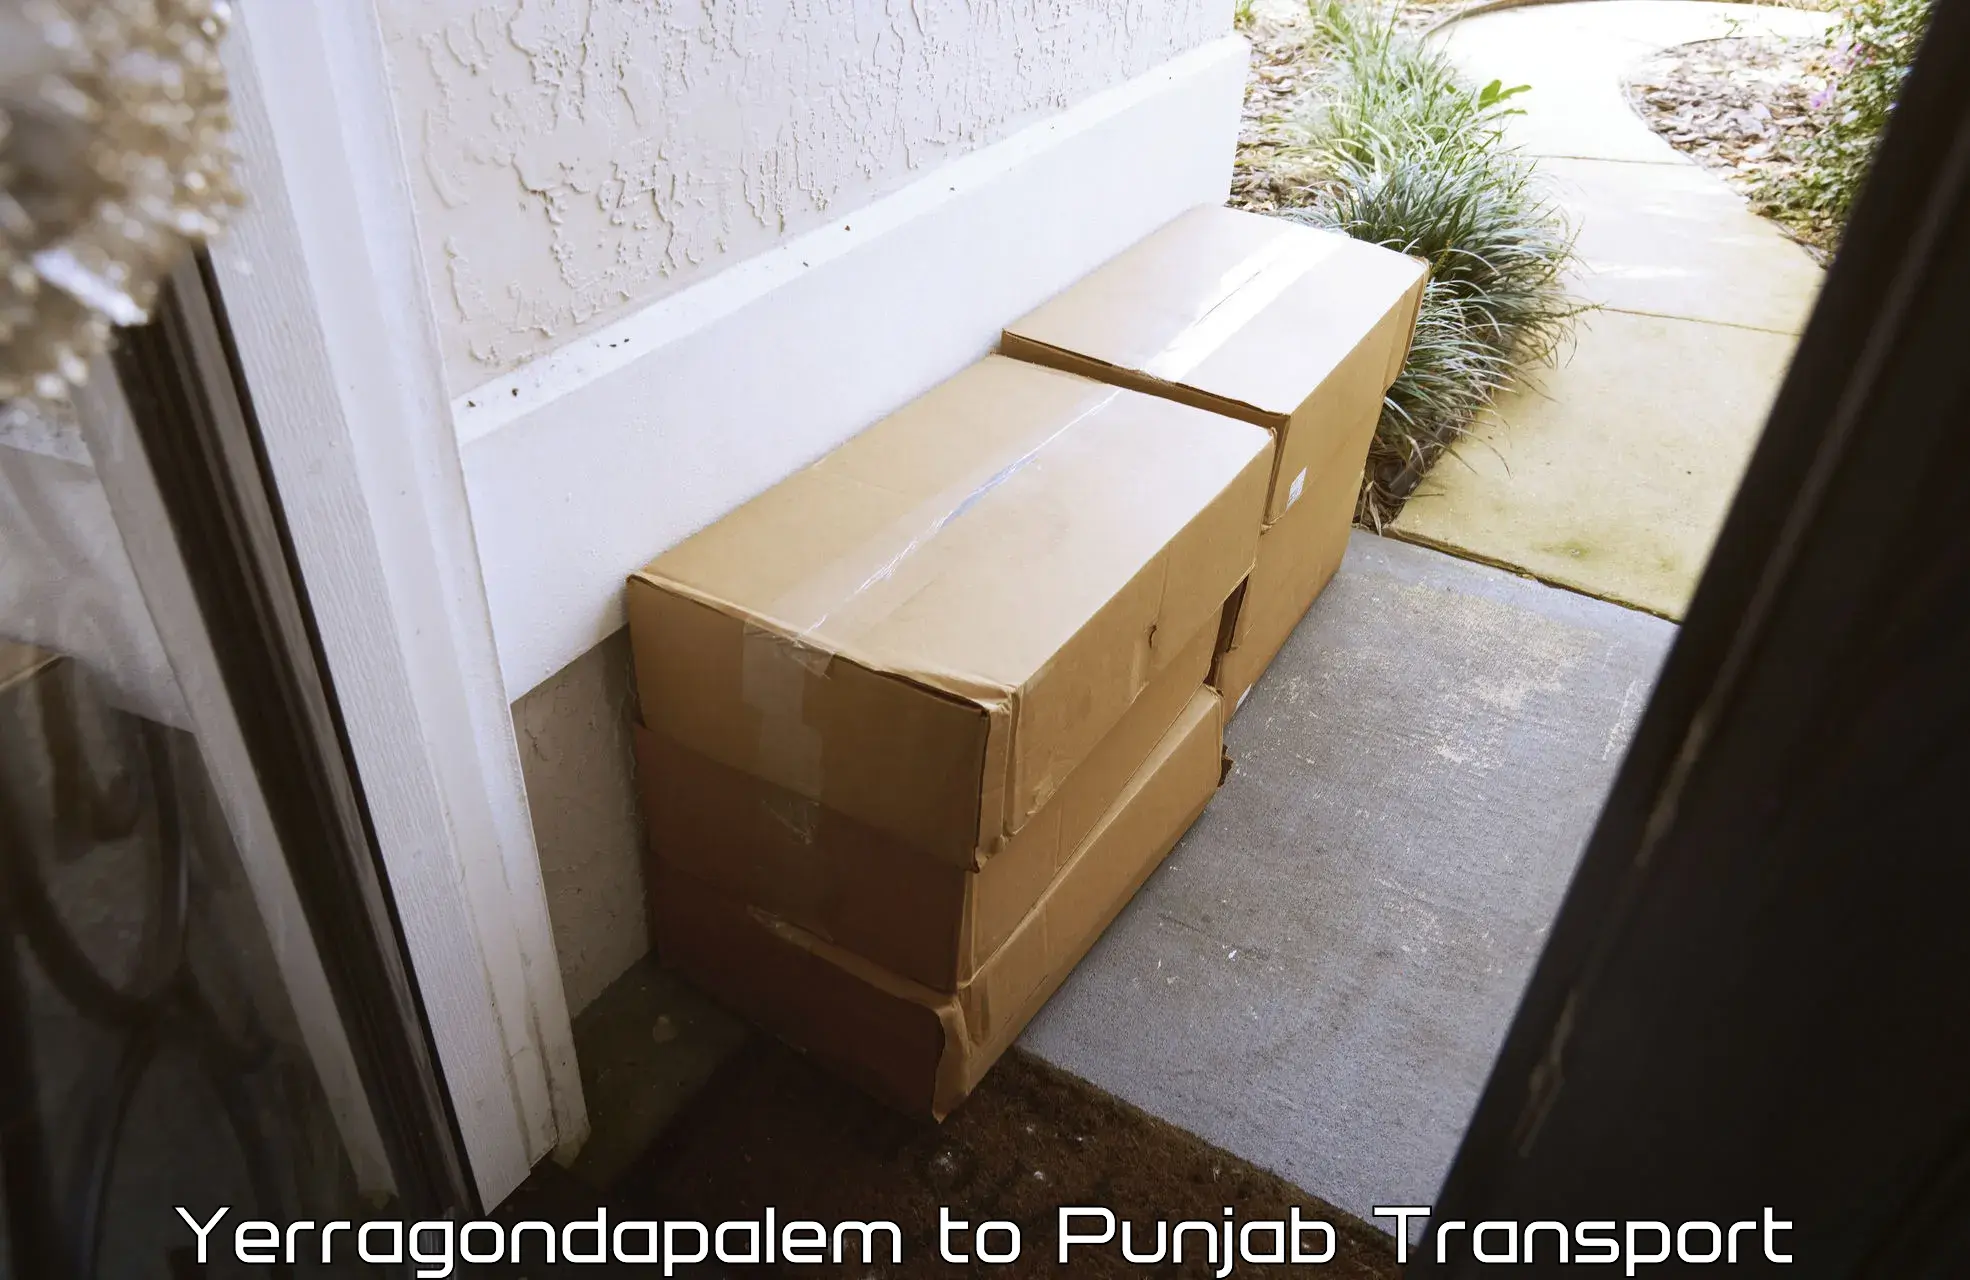 Cycle transportation service Yerragondapalem to Punjab